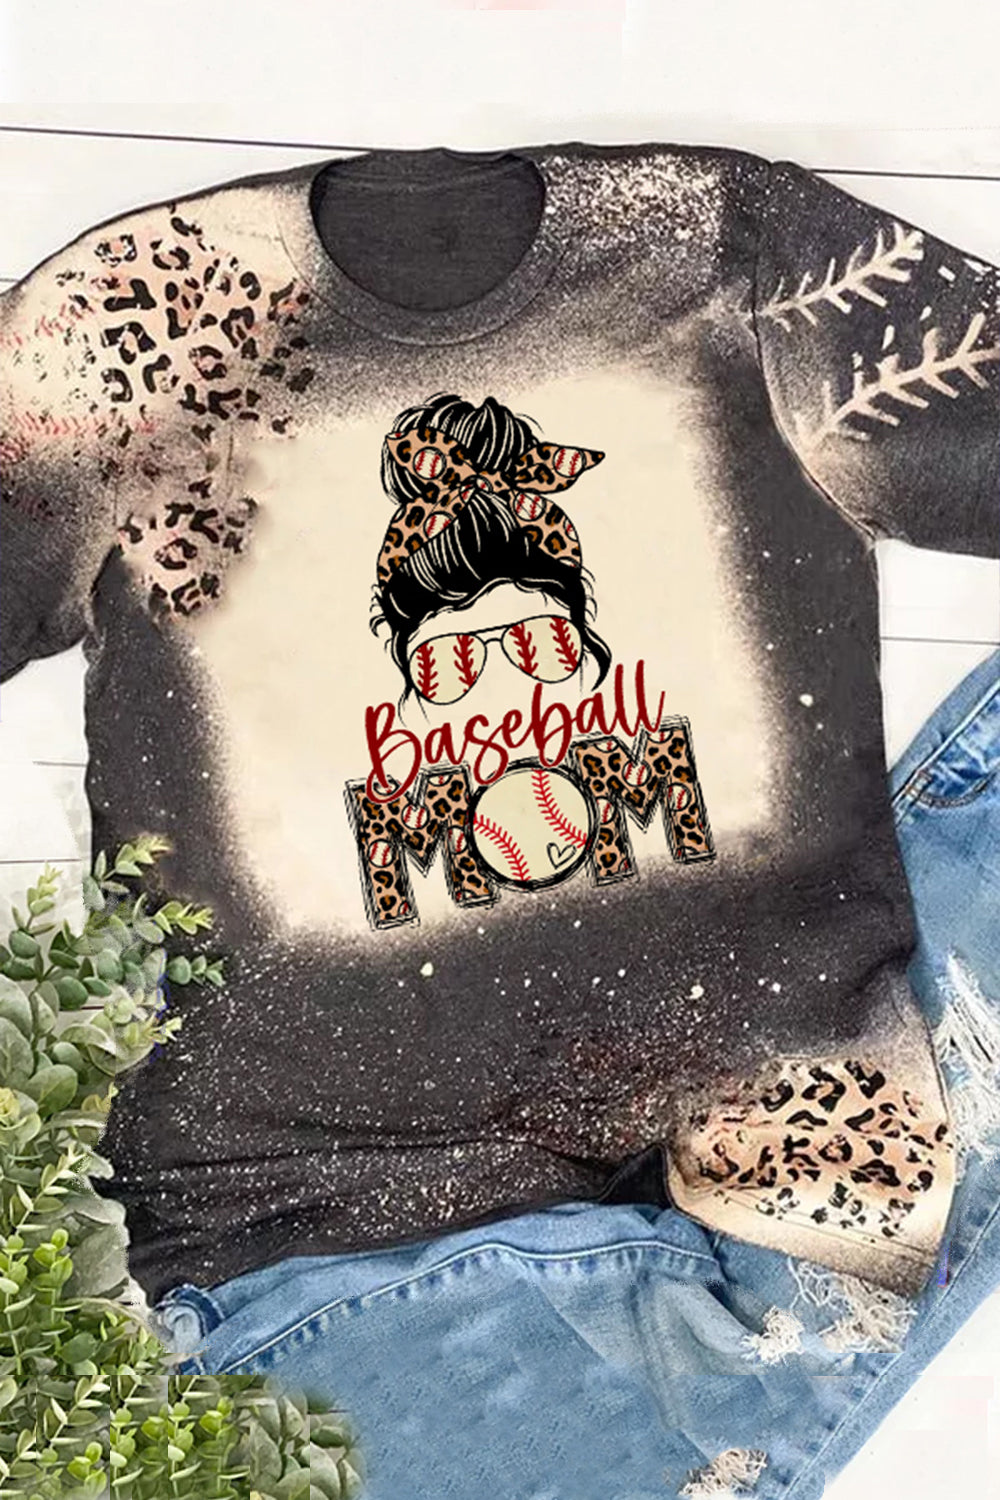 Baseball Mom Bleached Shirt